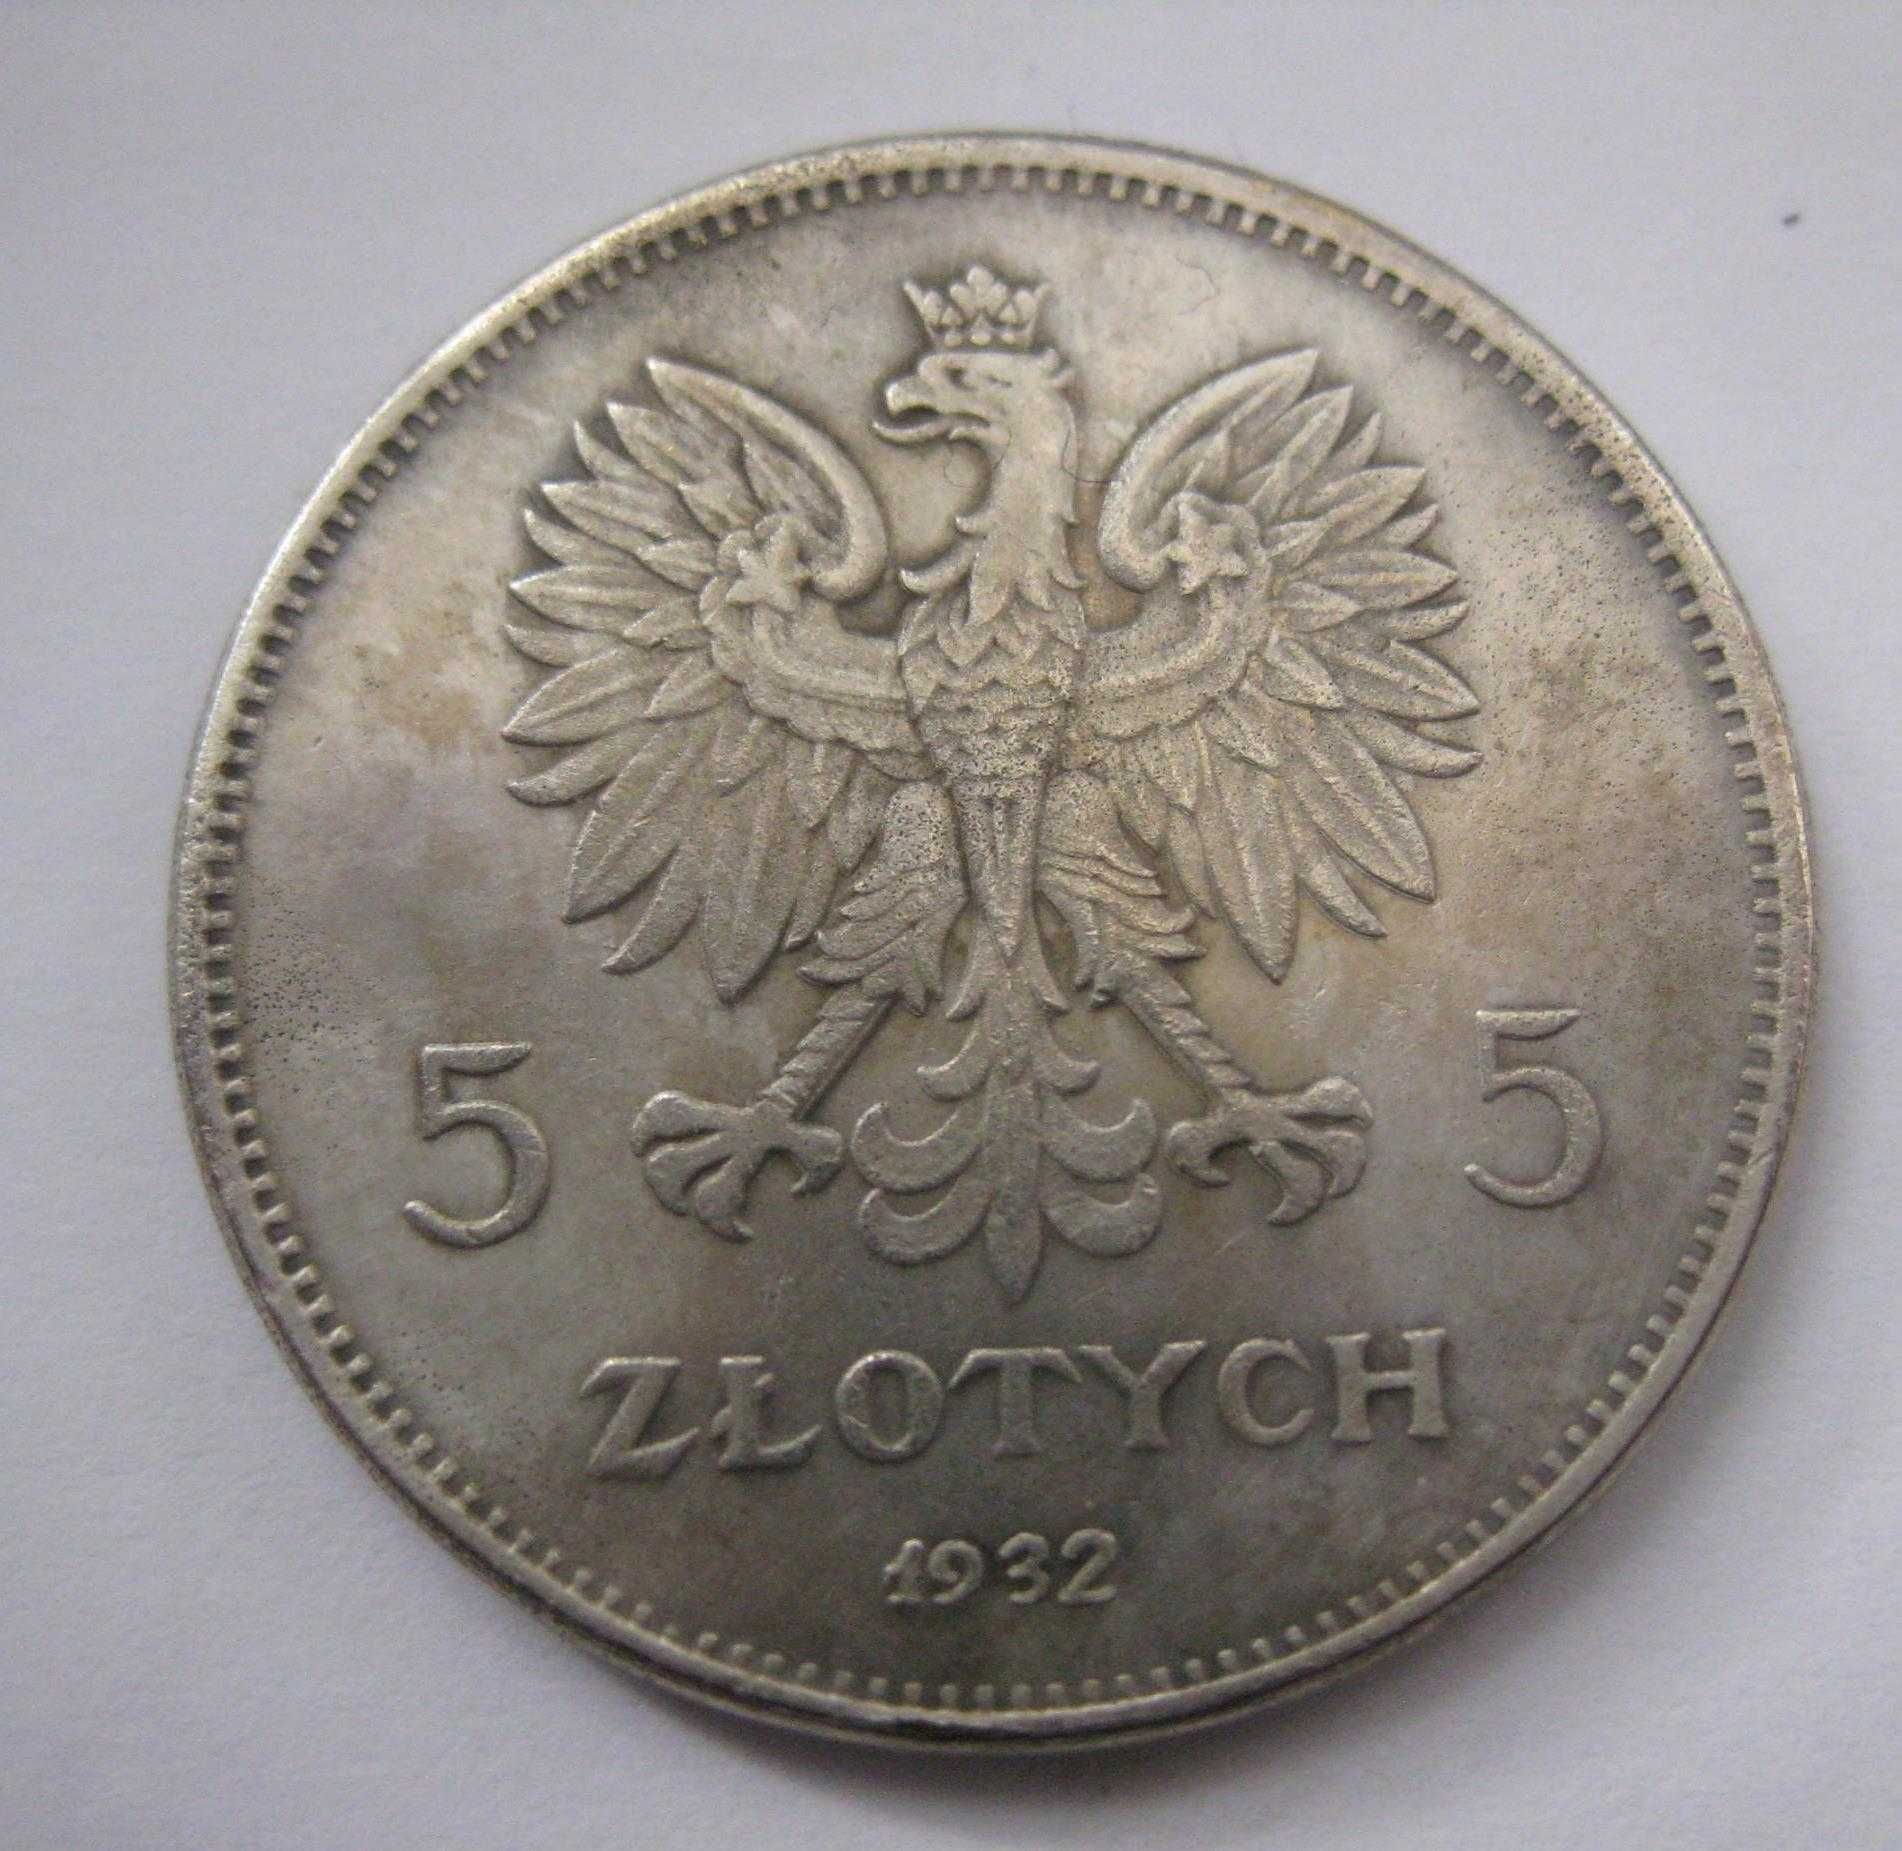 5 zł 1932 r kopia